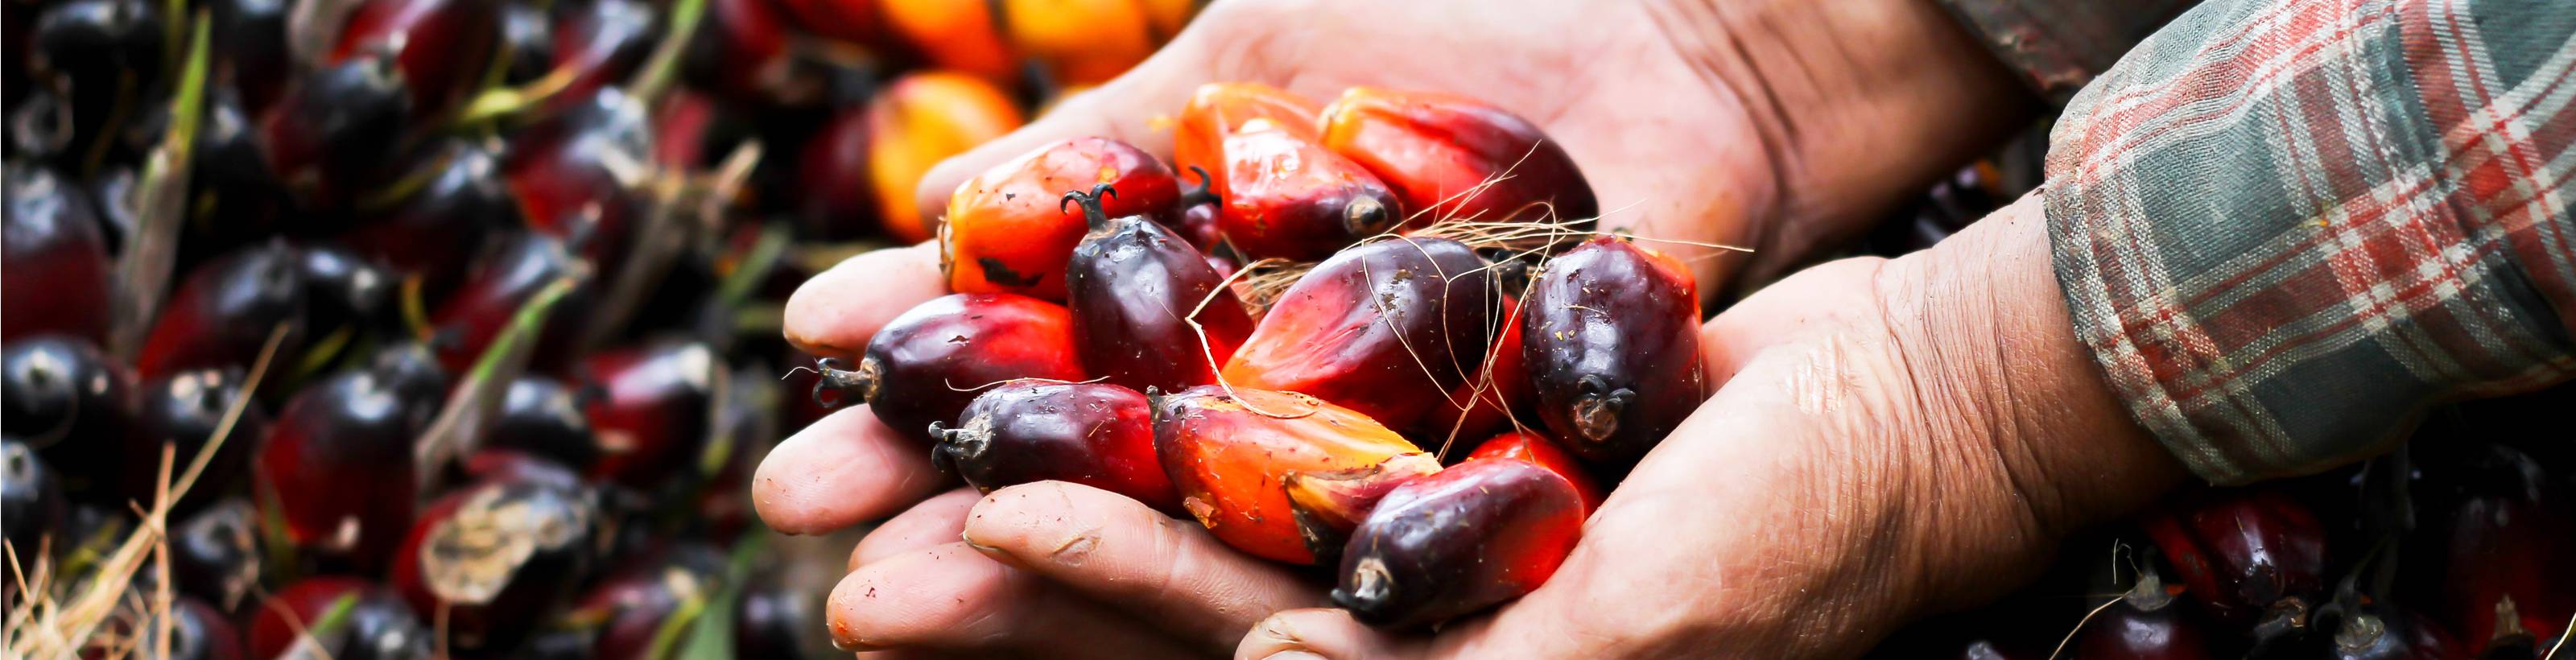 Co-op palm oil image